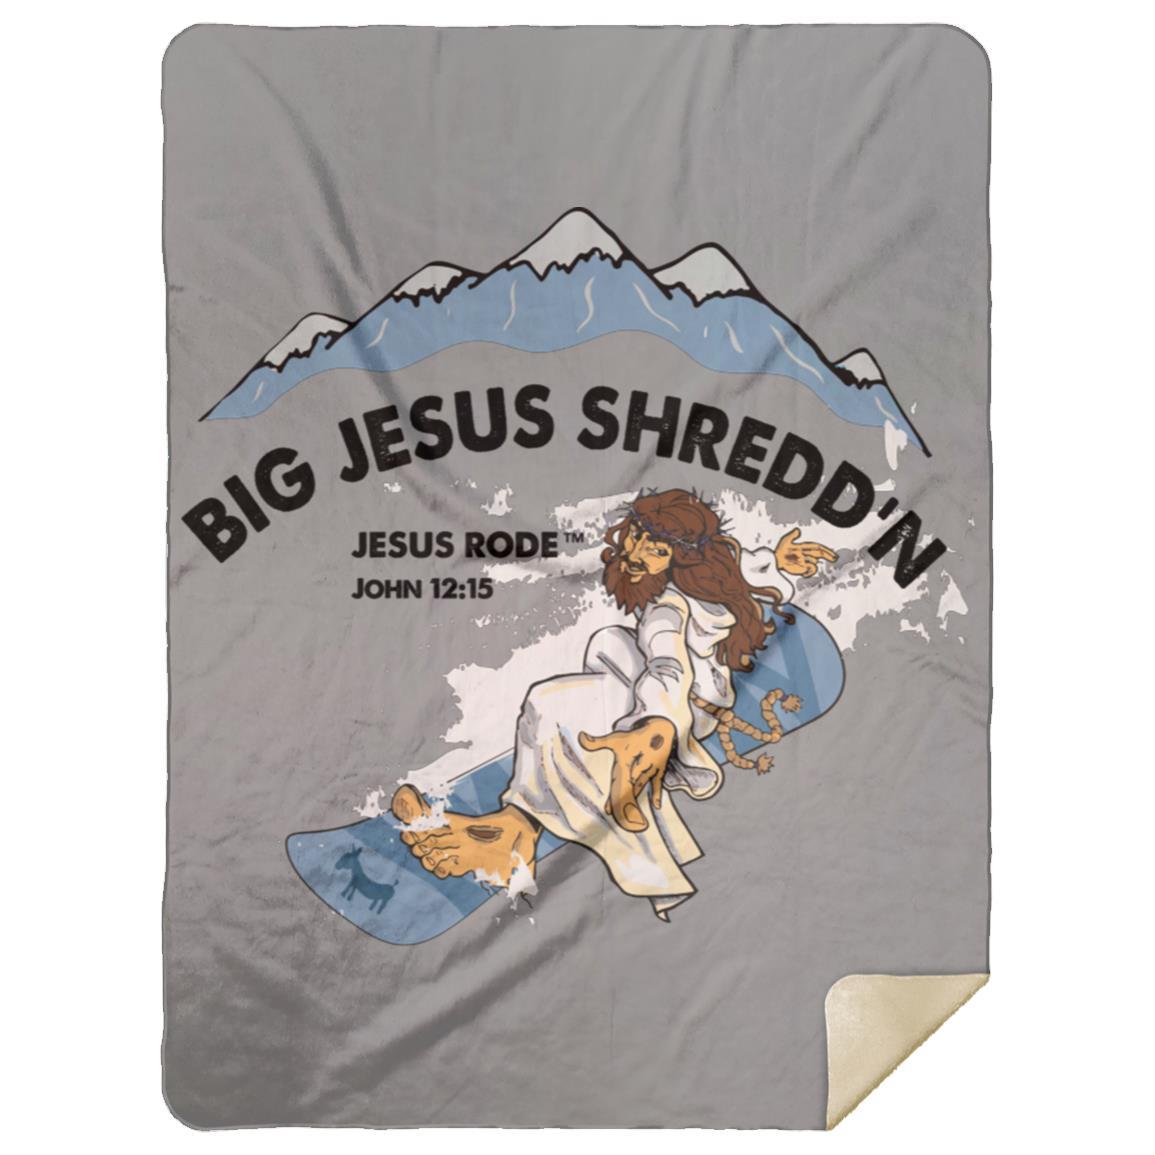 Shredd'n Jesus Premium Mink Sherpa Blanket 60x80